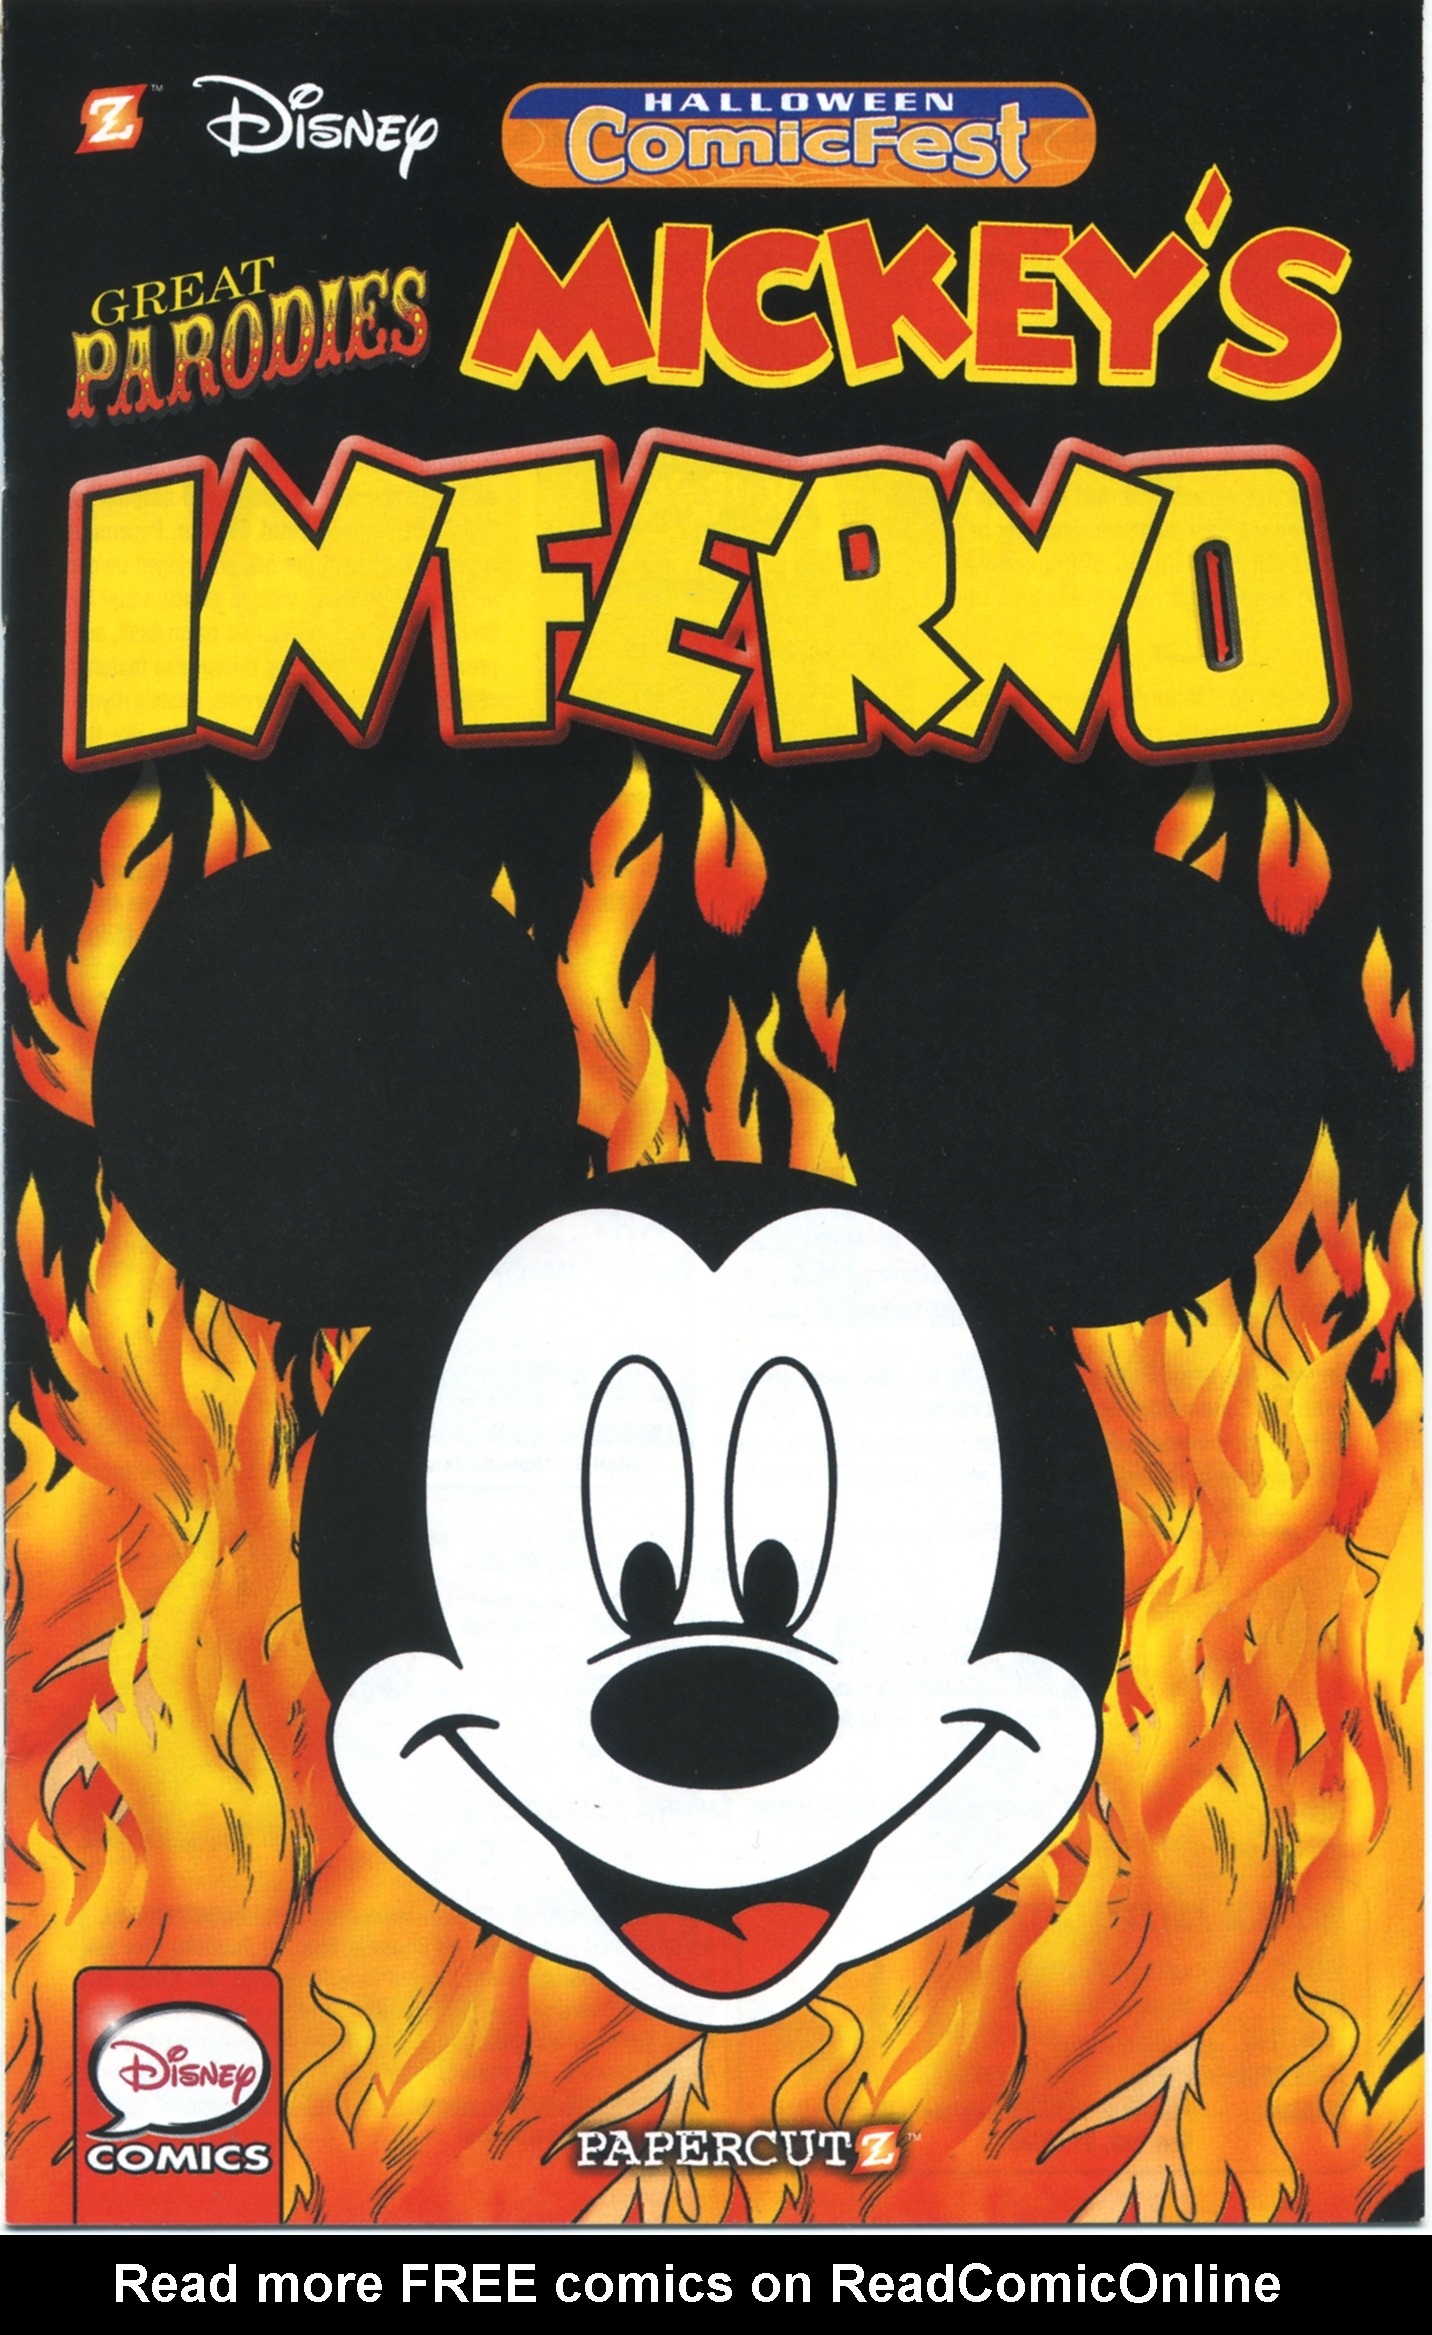 Read online Disney Great Parodies Vol. 1: Mickeys Inferno comic -  Issue # Full - 1